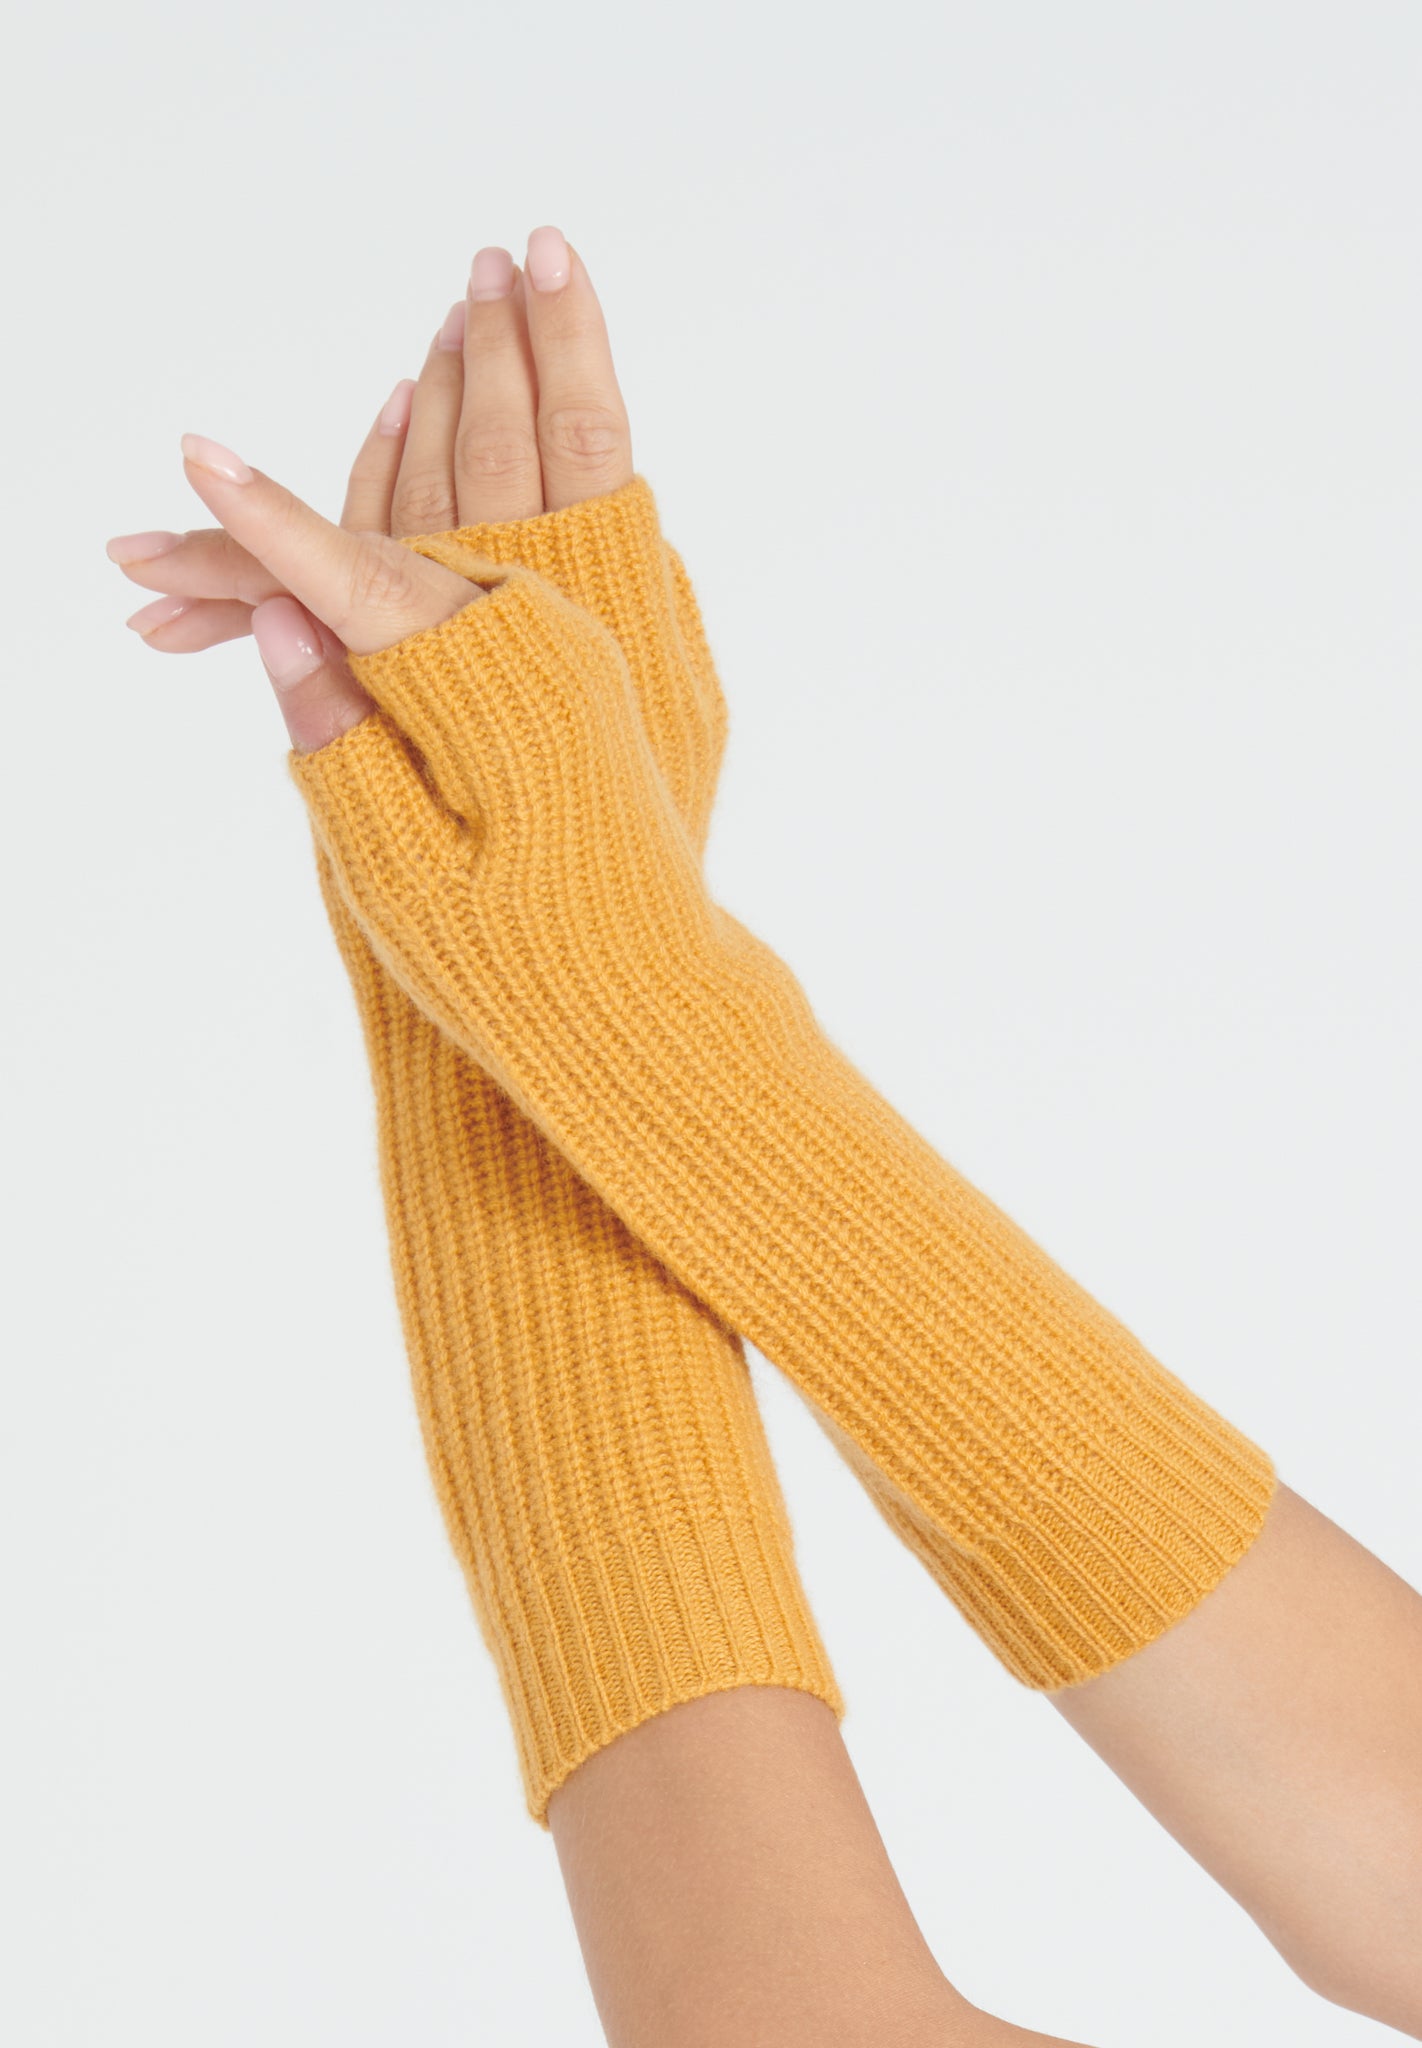 UNI 8 English rib knitted mittens in mustard yellow 4-thread cashmere